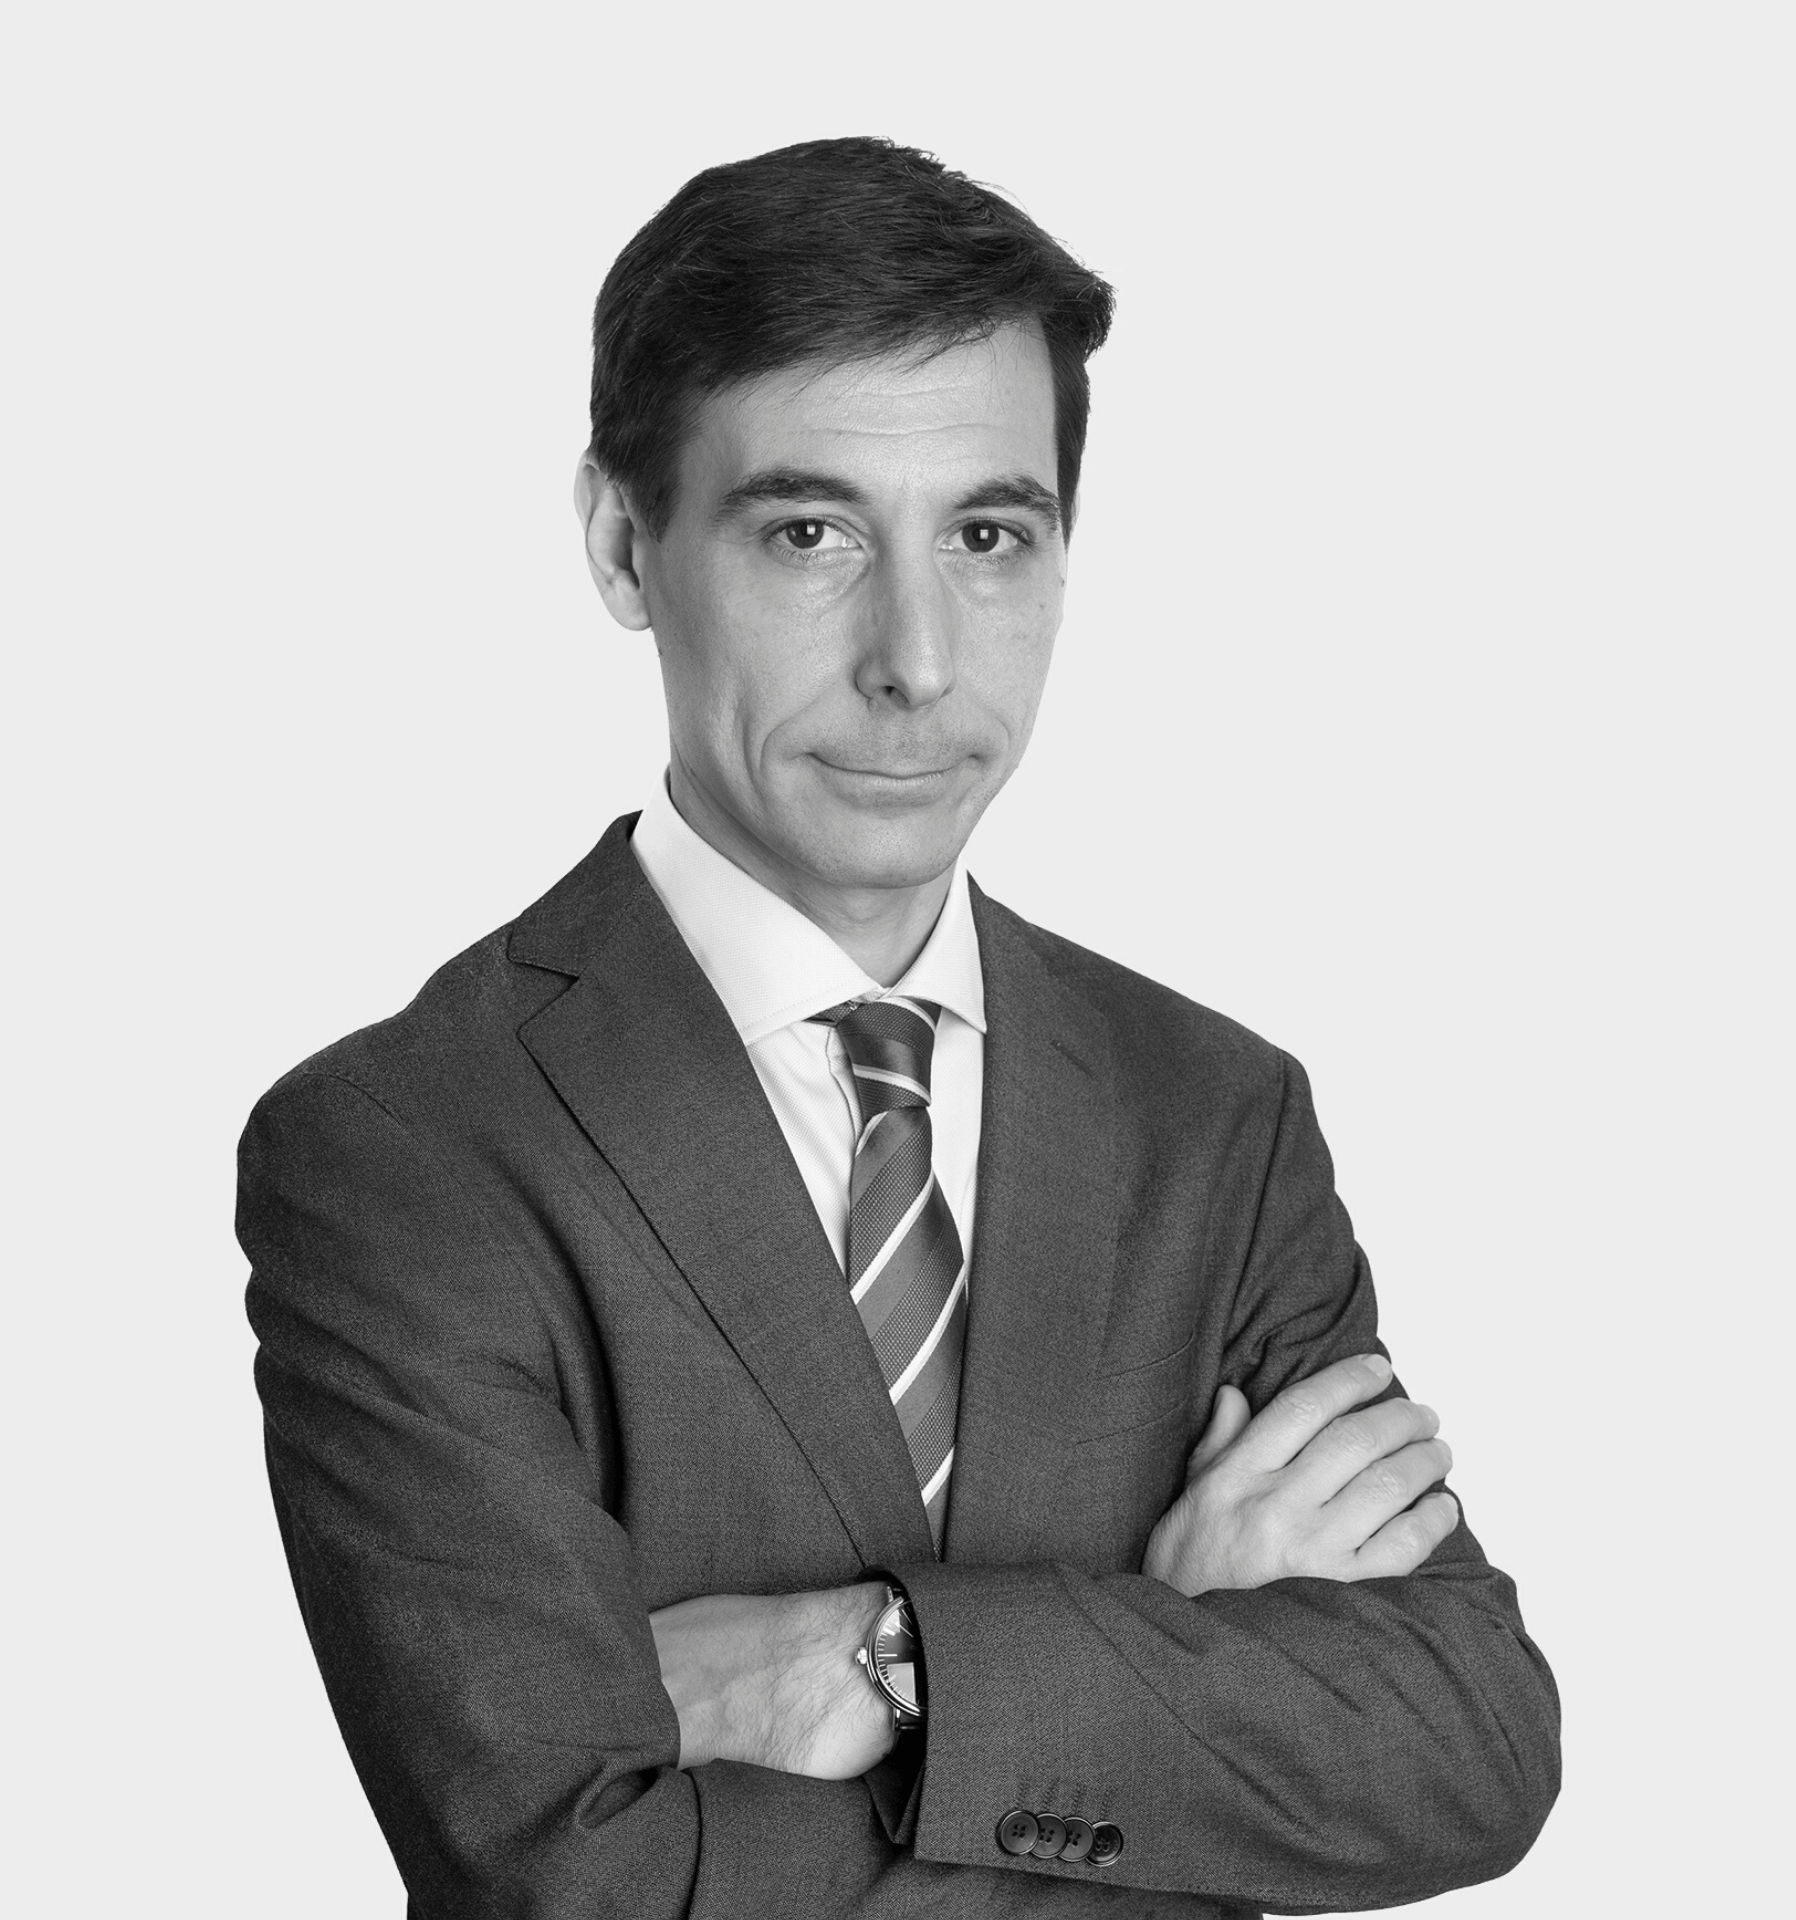 Juan Segarra has been appointed Director of the Molins Defensa Penal Litigation Department in Barcelona’s office